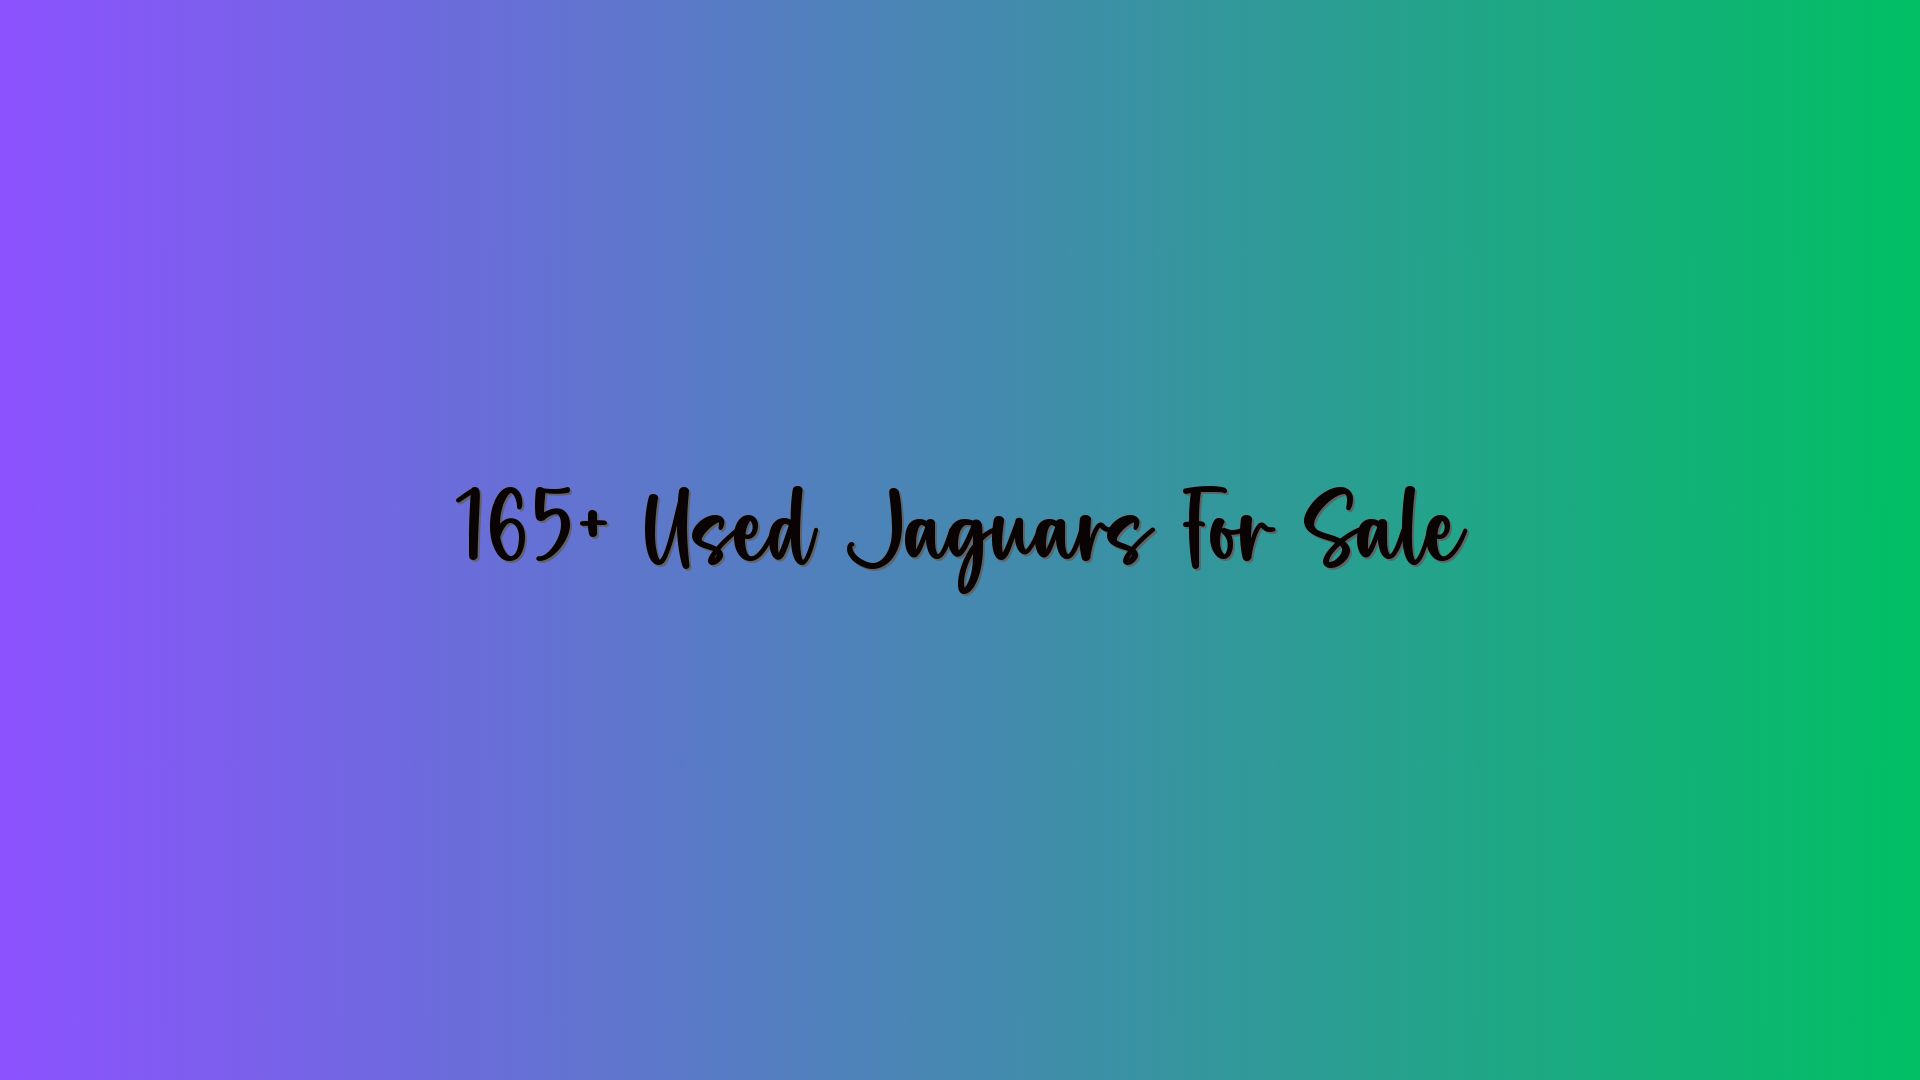 165+ Used Jaguars For Sale